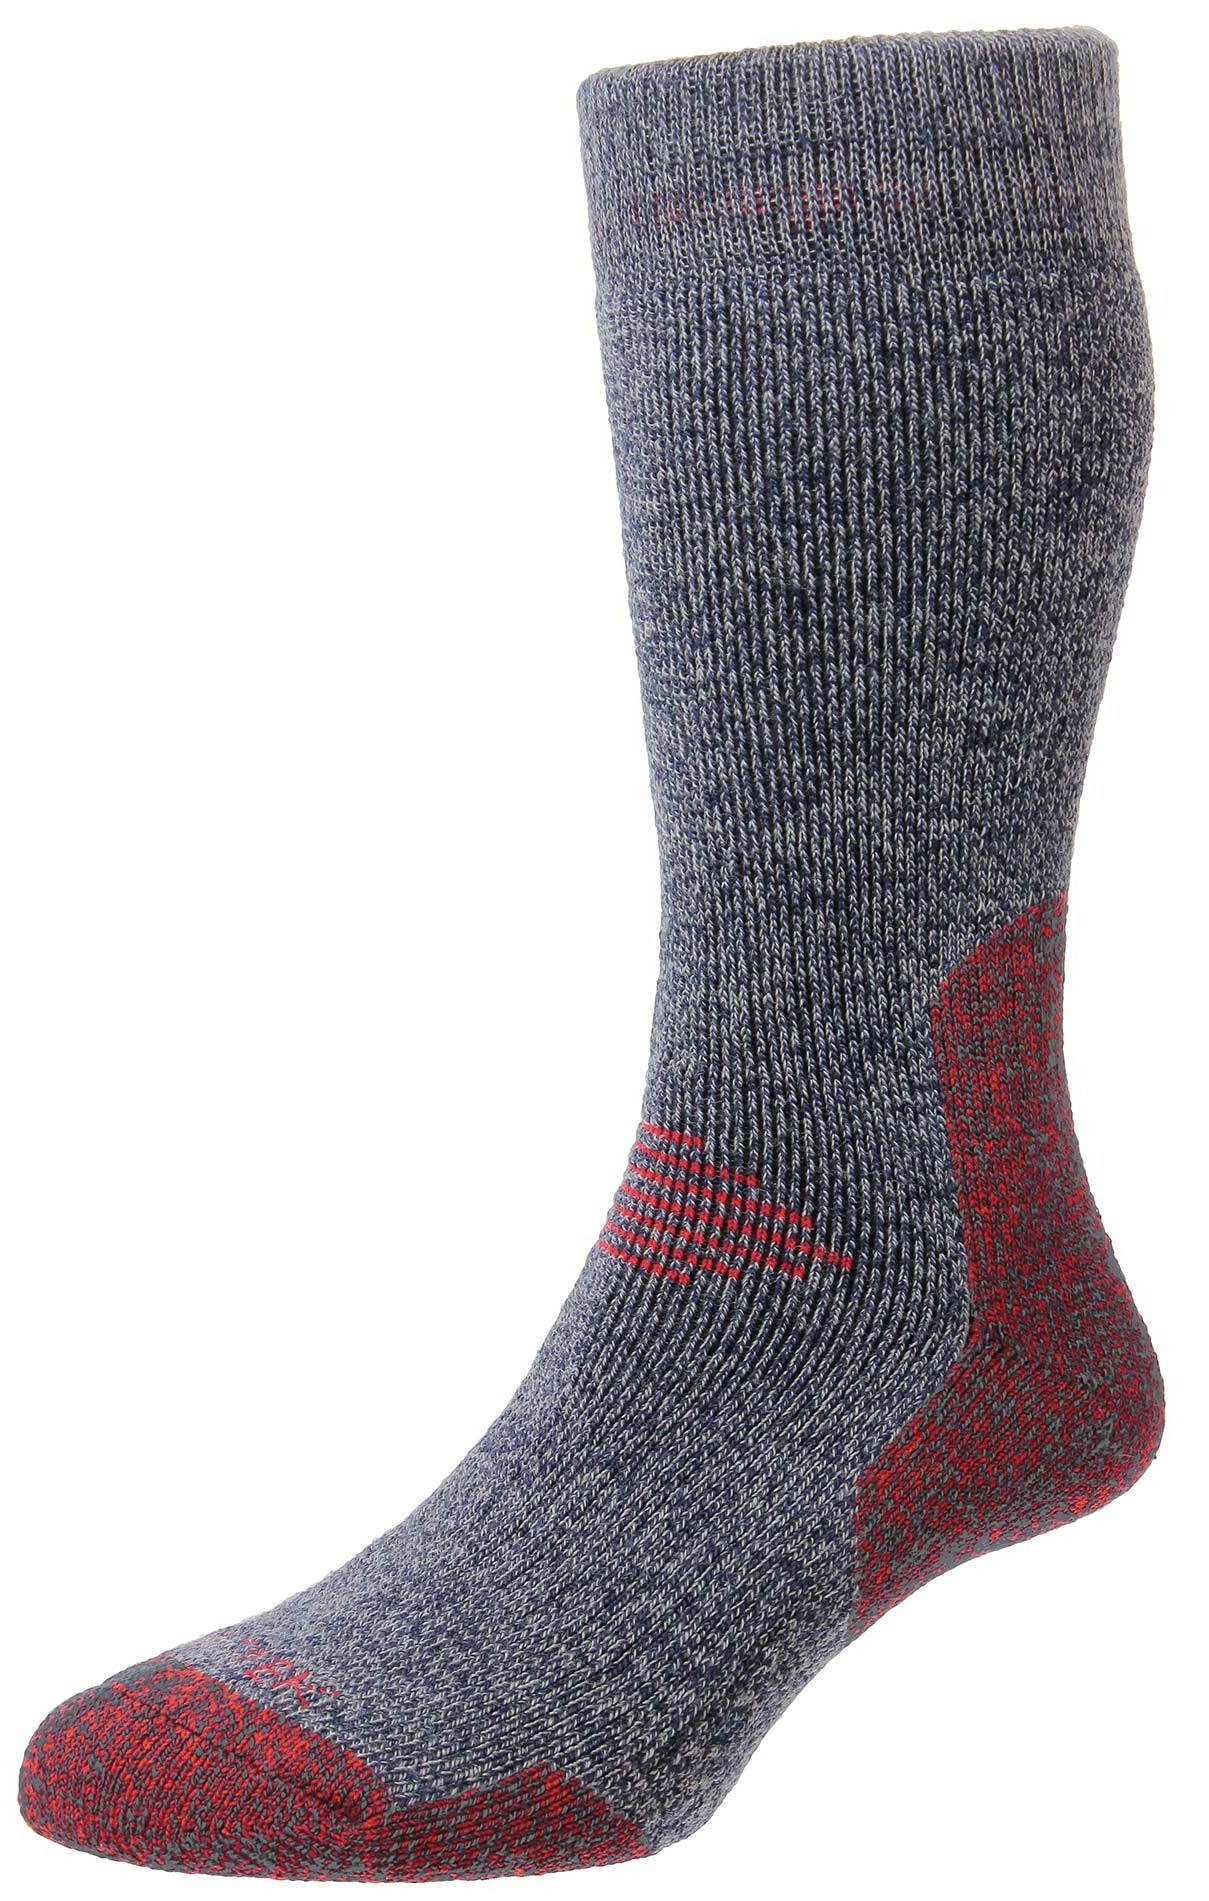 HJ Socks HJ702 Denim/Red size 4-7